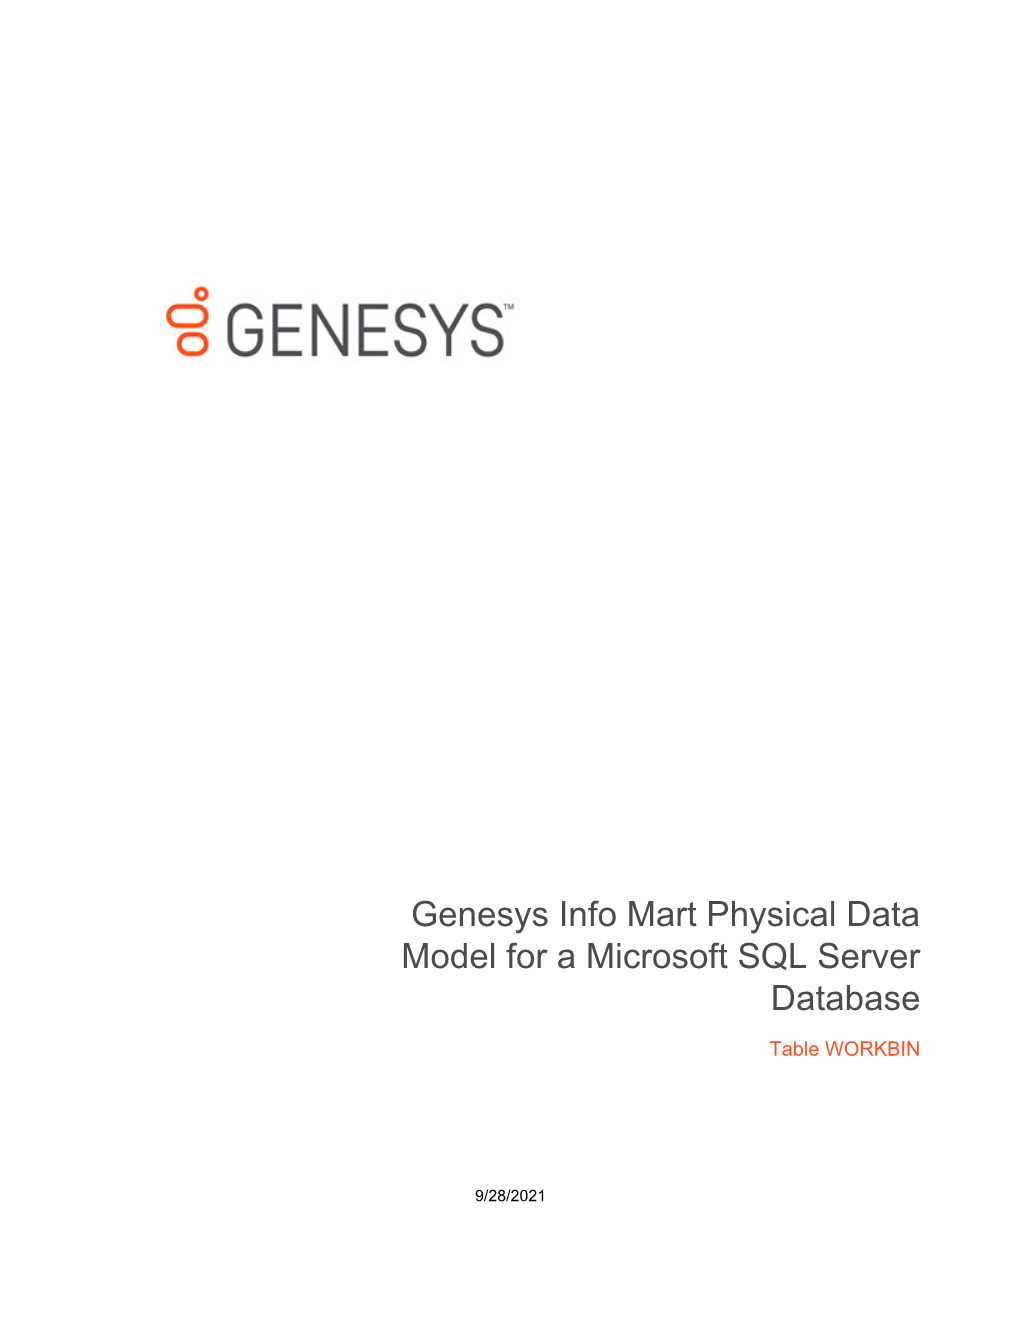 Genesys Info Mart Physical Data Model for a Microsoft SQL Server Database